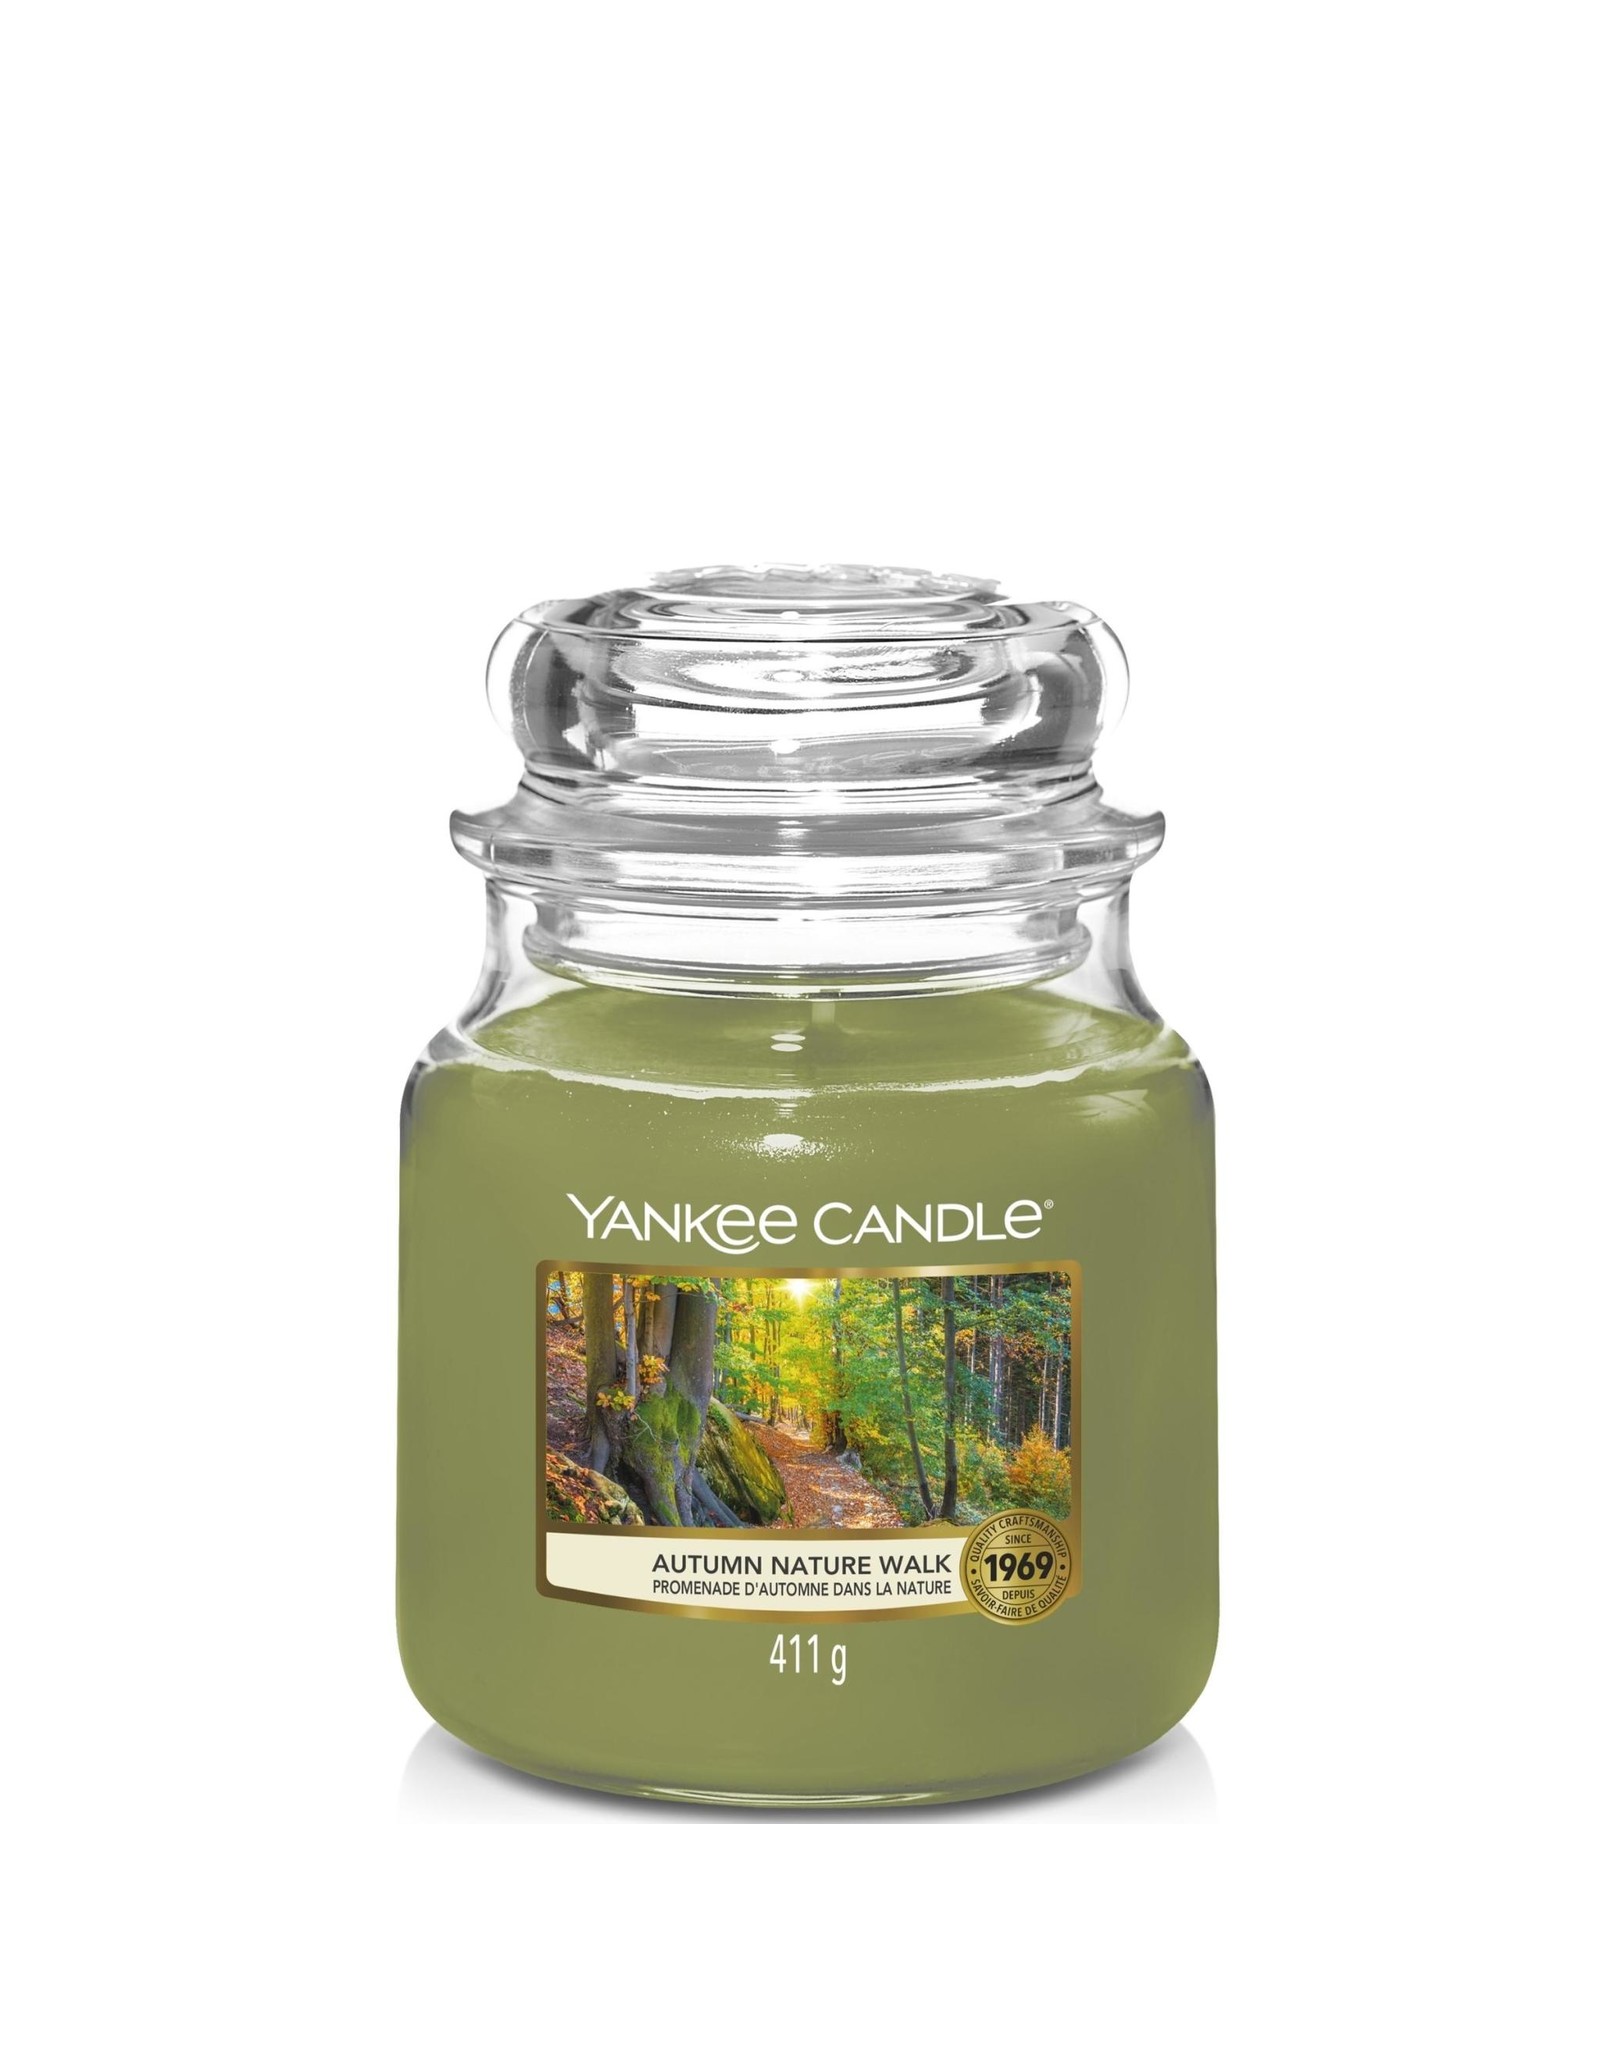 Yankee Candle Autumn Nature Walk - Medium Jar